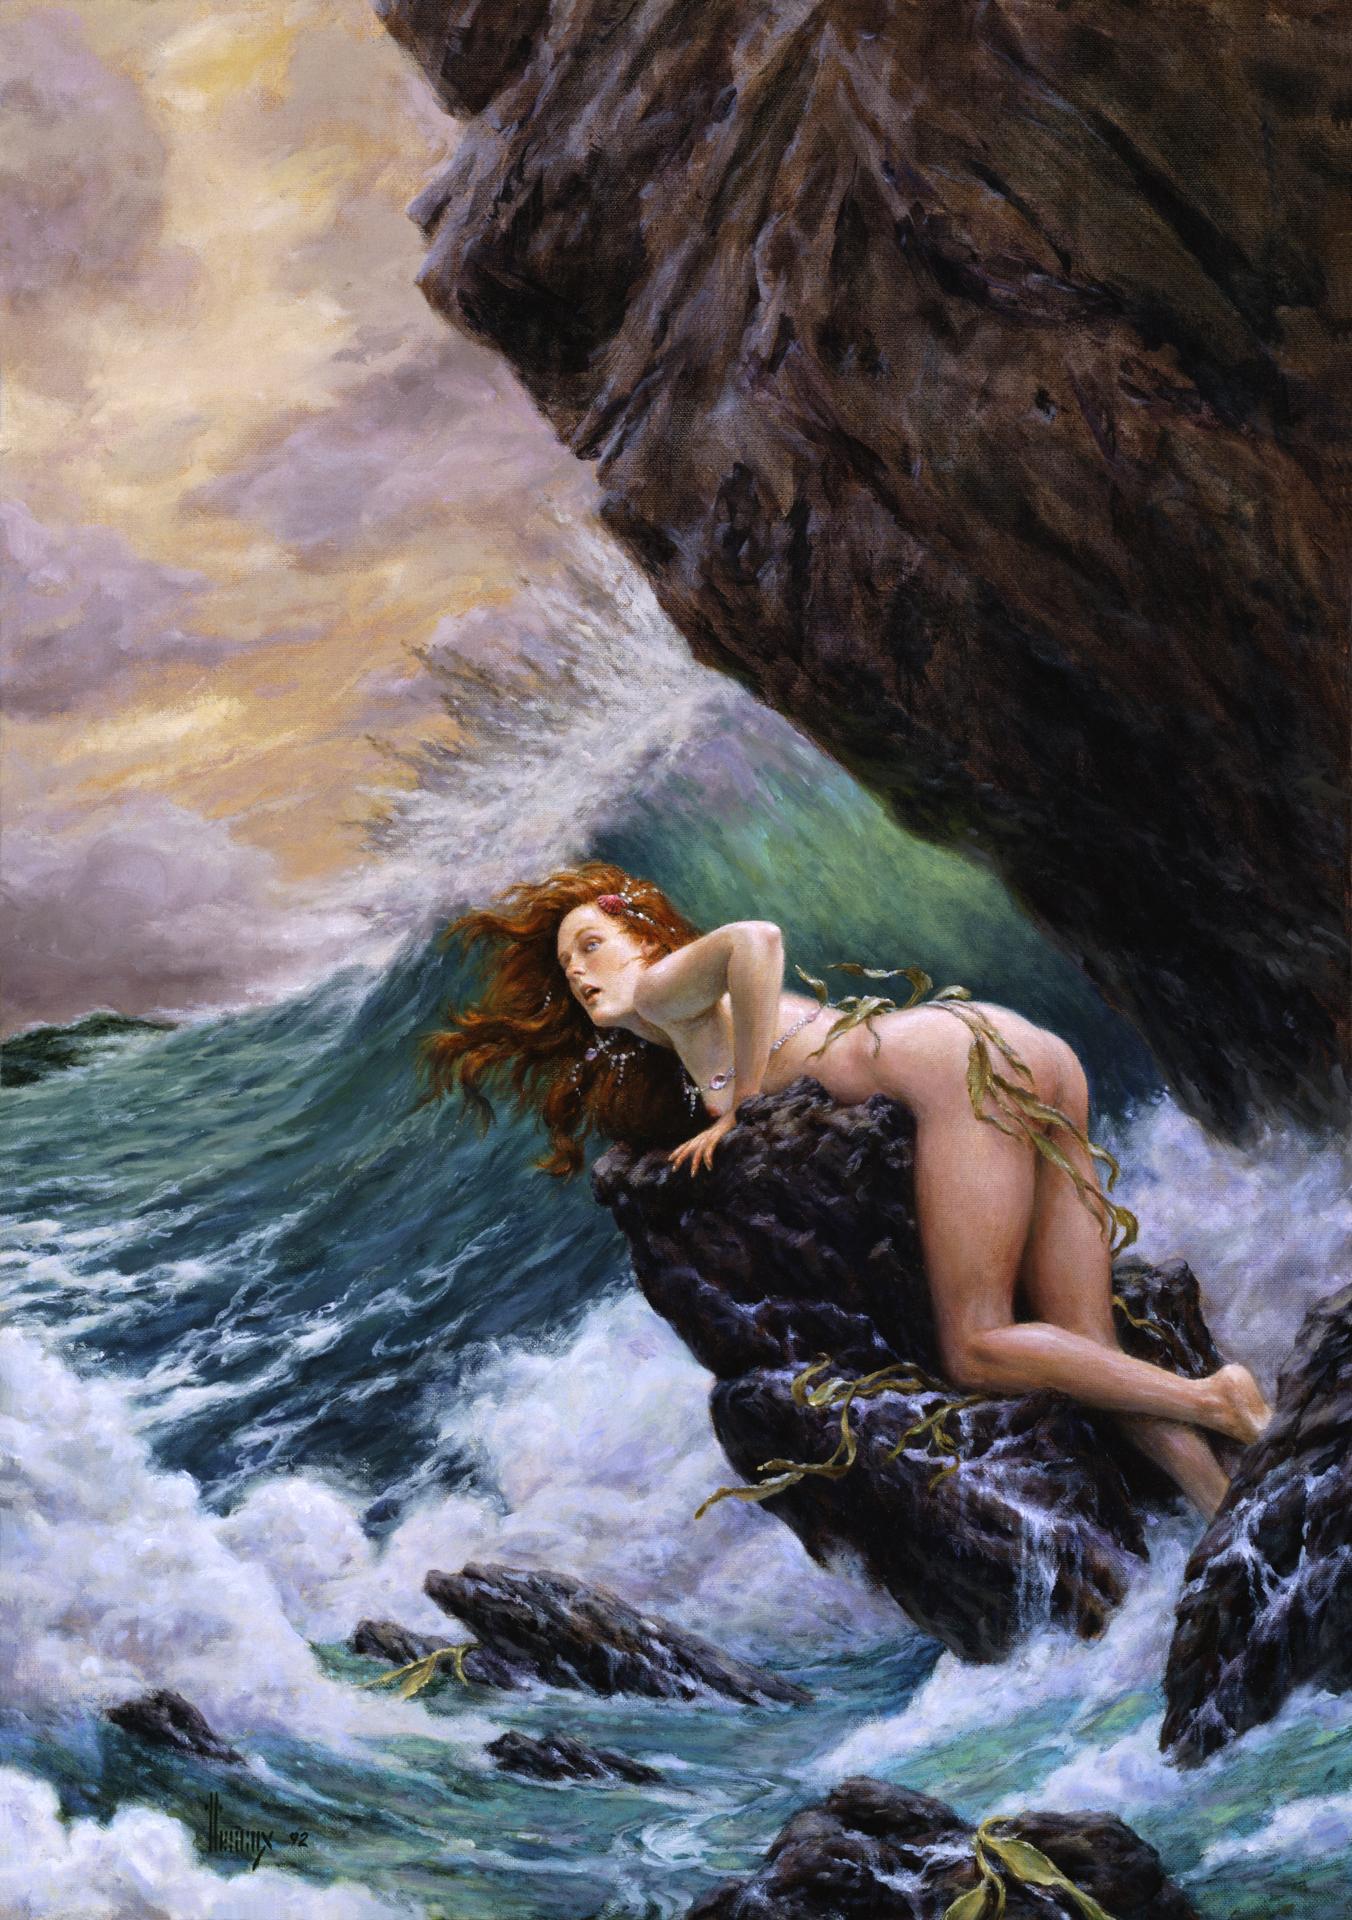 Song of the Siren - Art by Richard Hescox